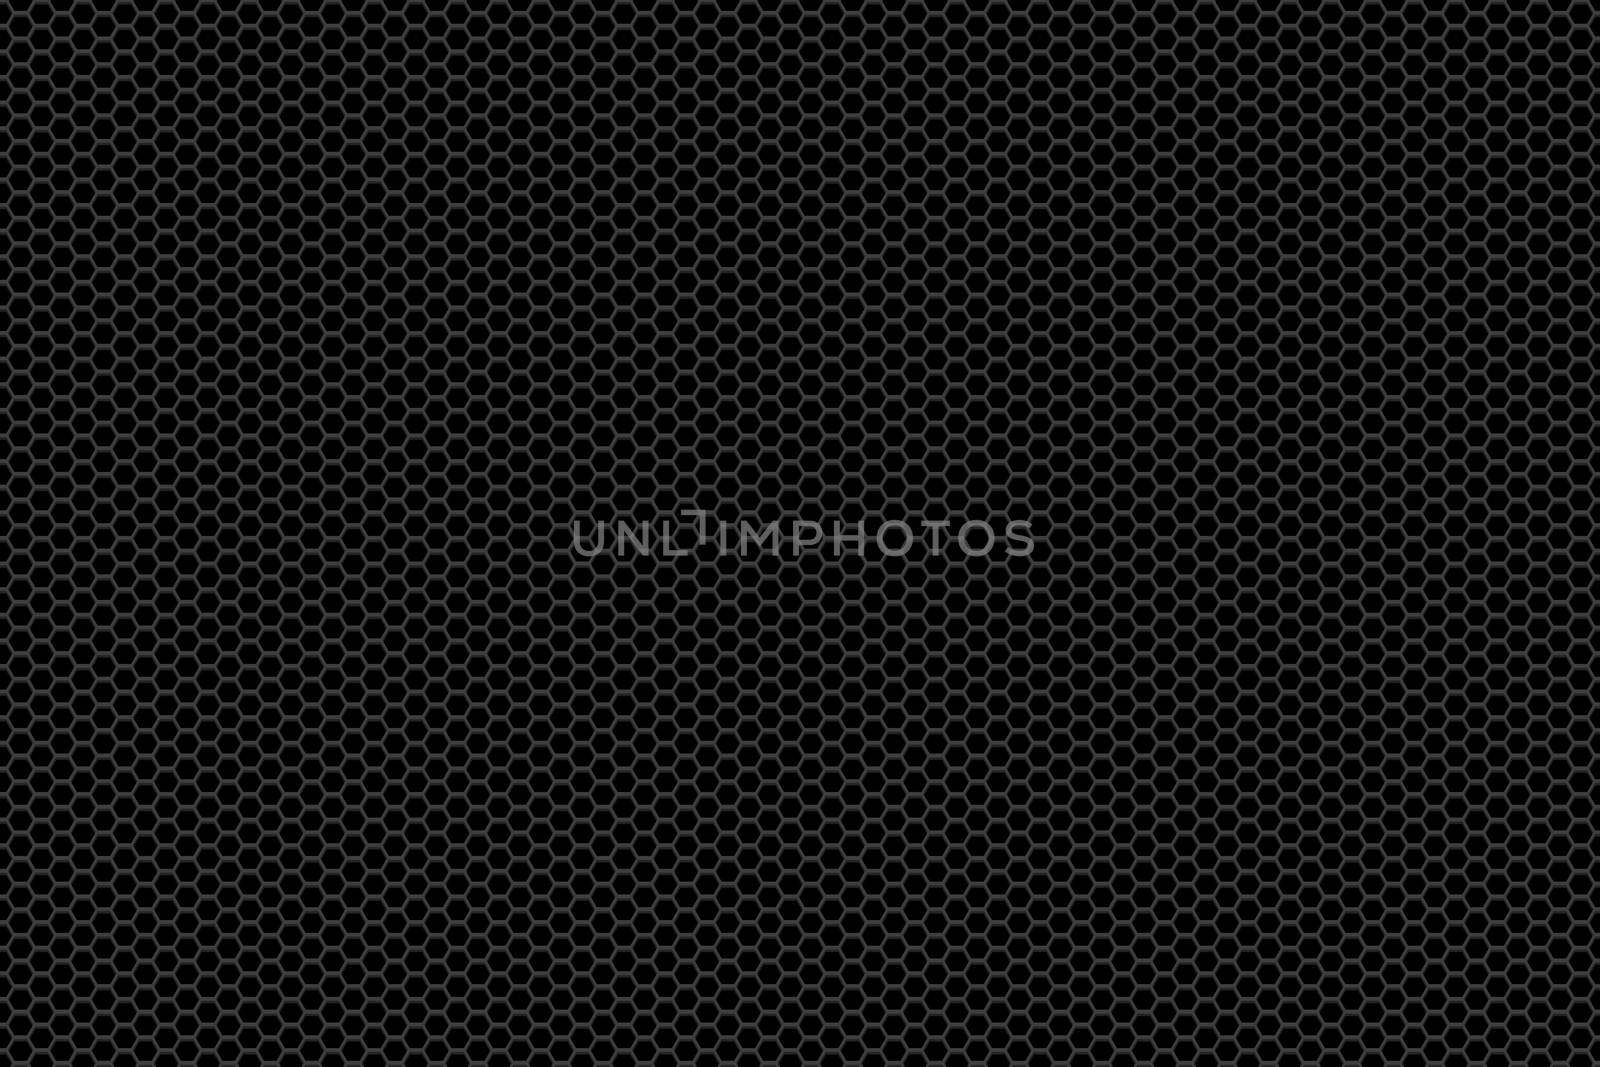 black metallic mesh background texture by Tanayus